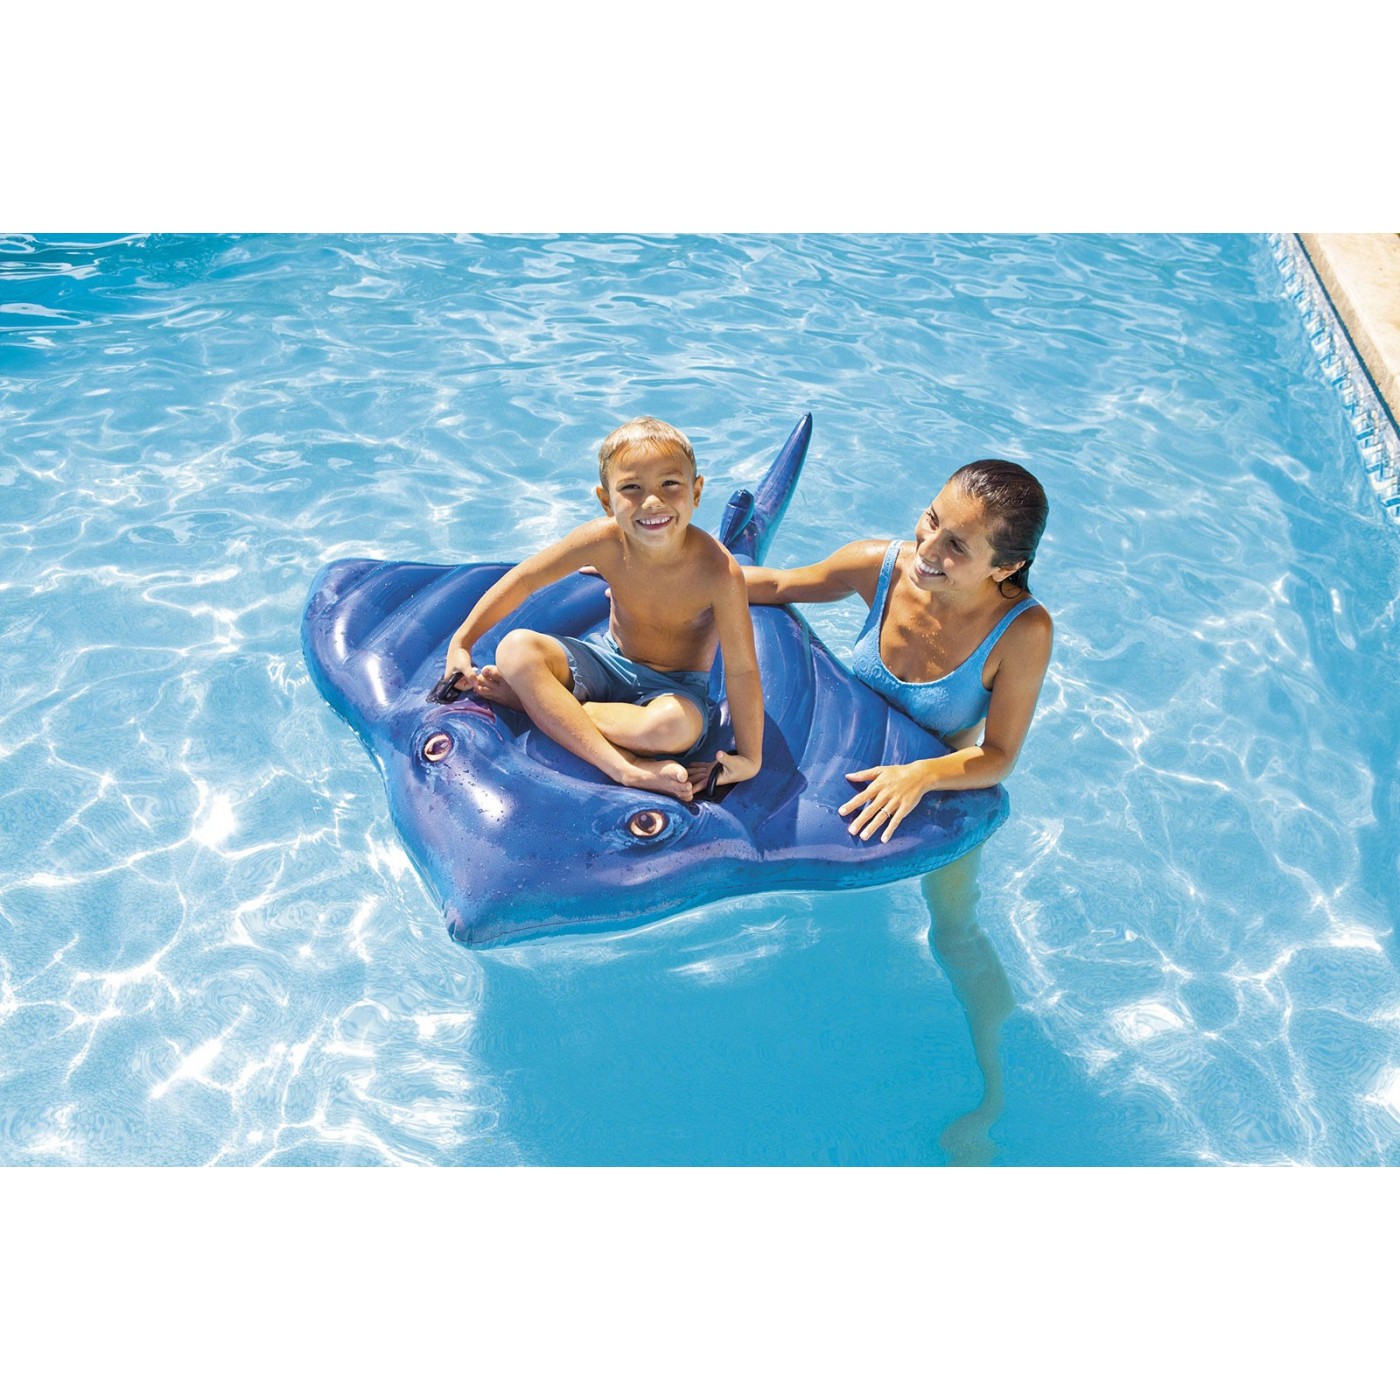 Intex Inflatable Stingray Ride On Swimming Pool | Swimming Accessories | Best Inflatable Pool in Bahrain | Halabh.com